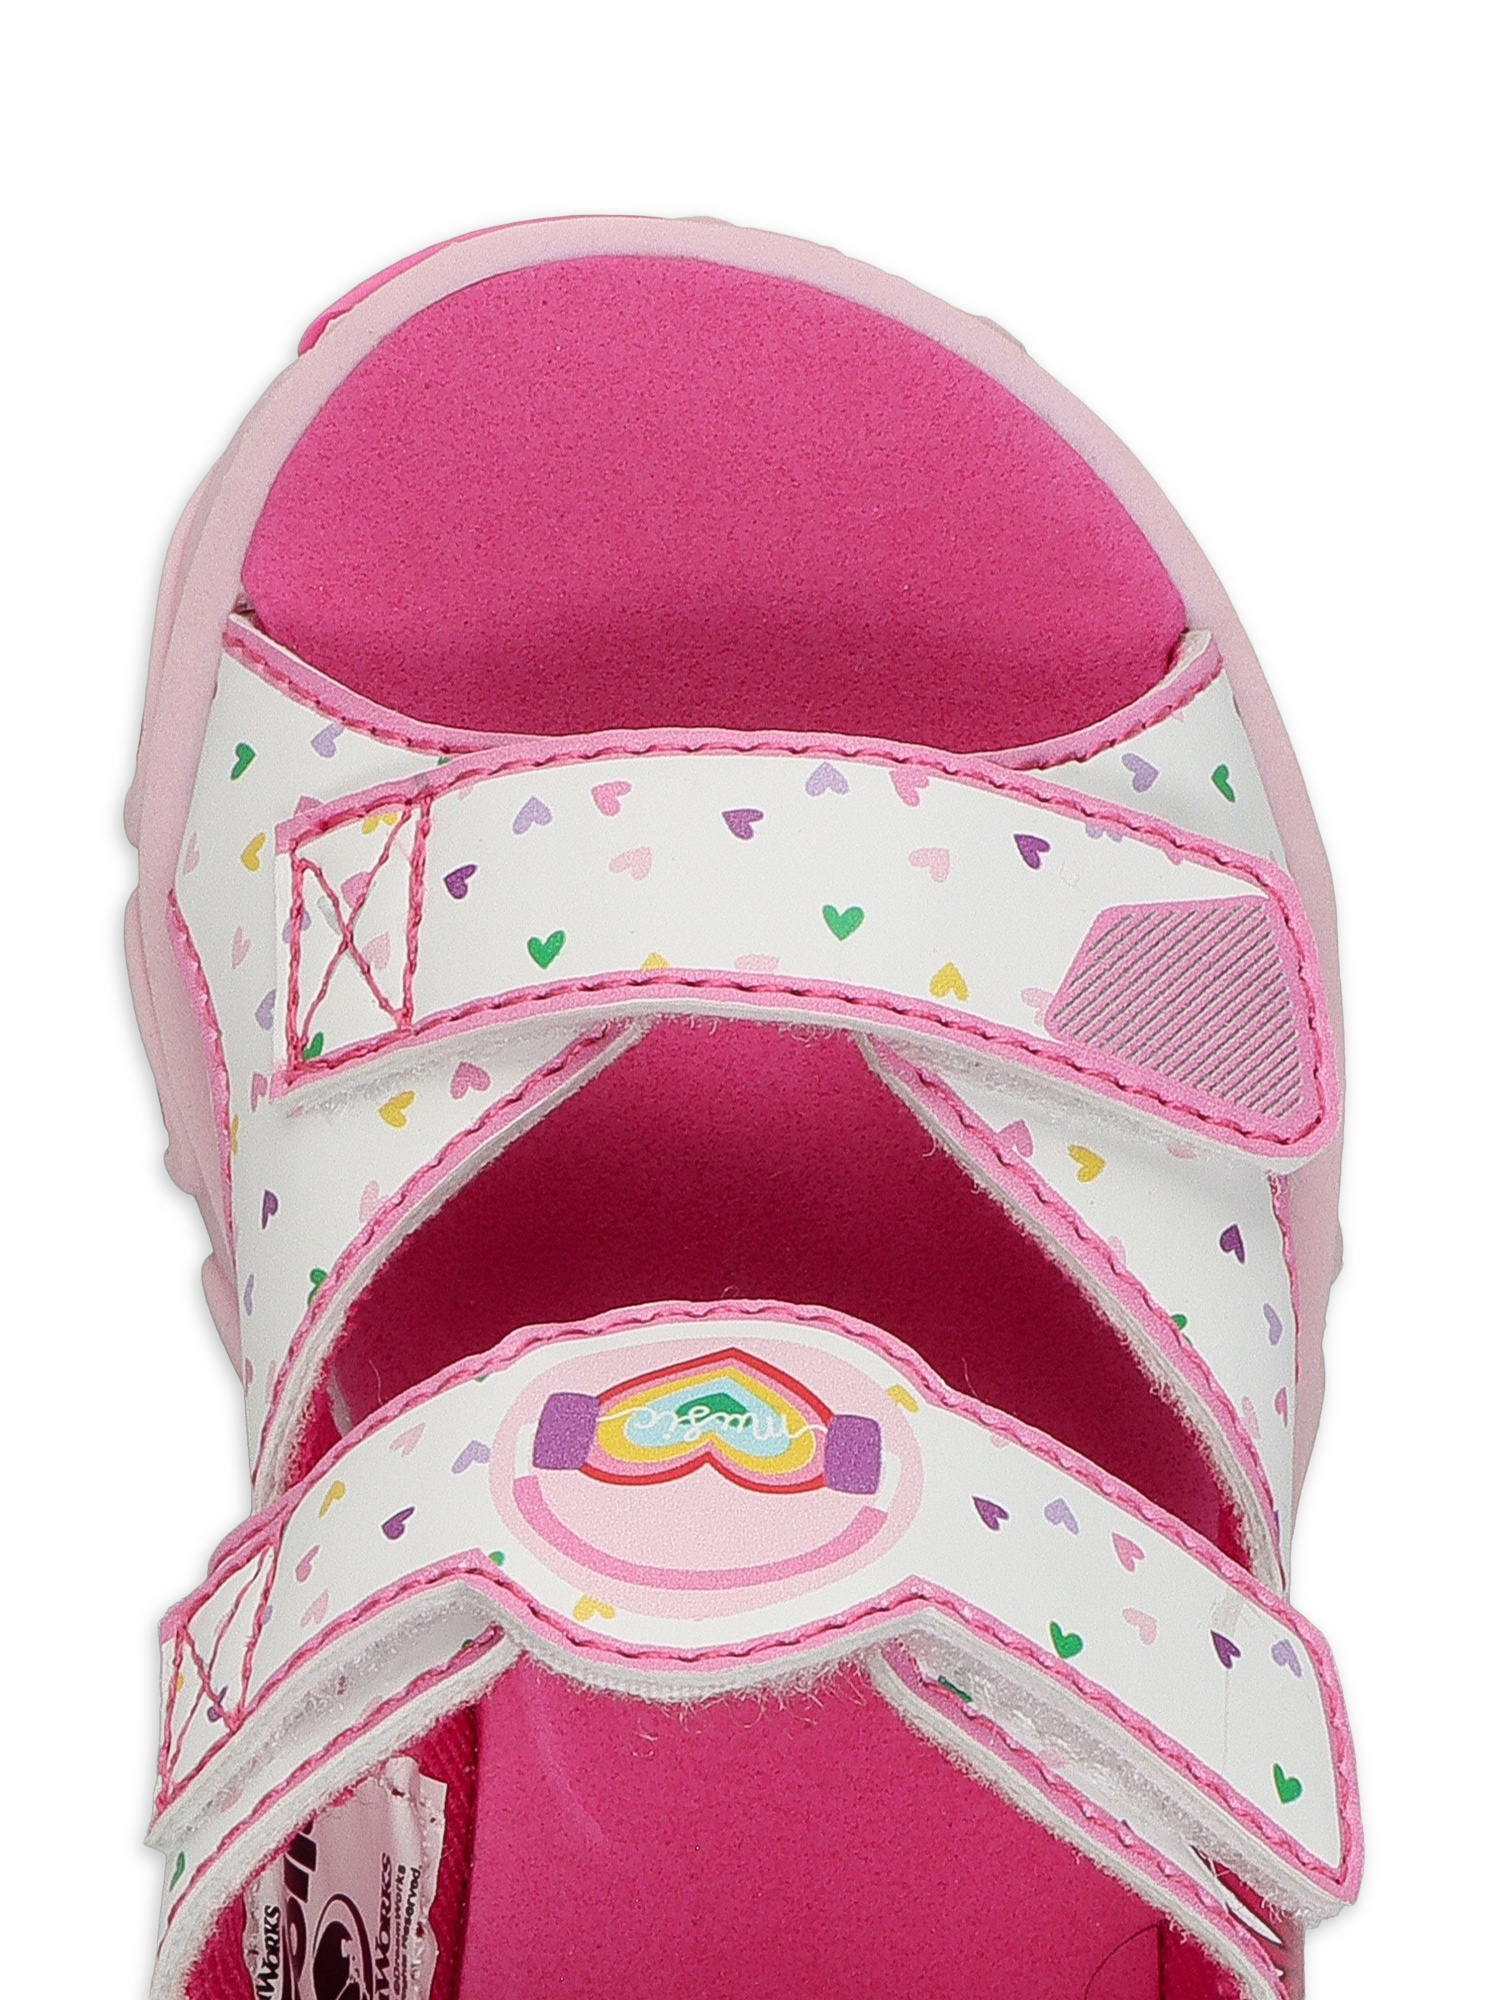 Trolls Light Up Printed Active Sandal (Toddler Girls) - image 4 of 6